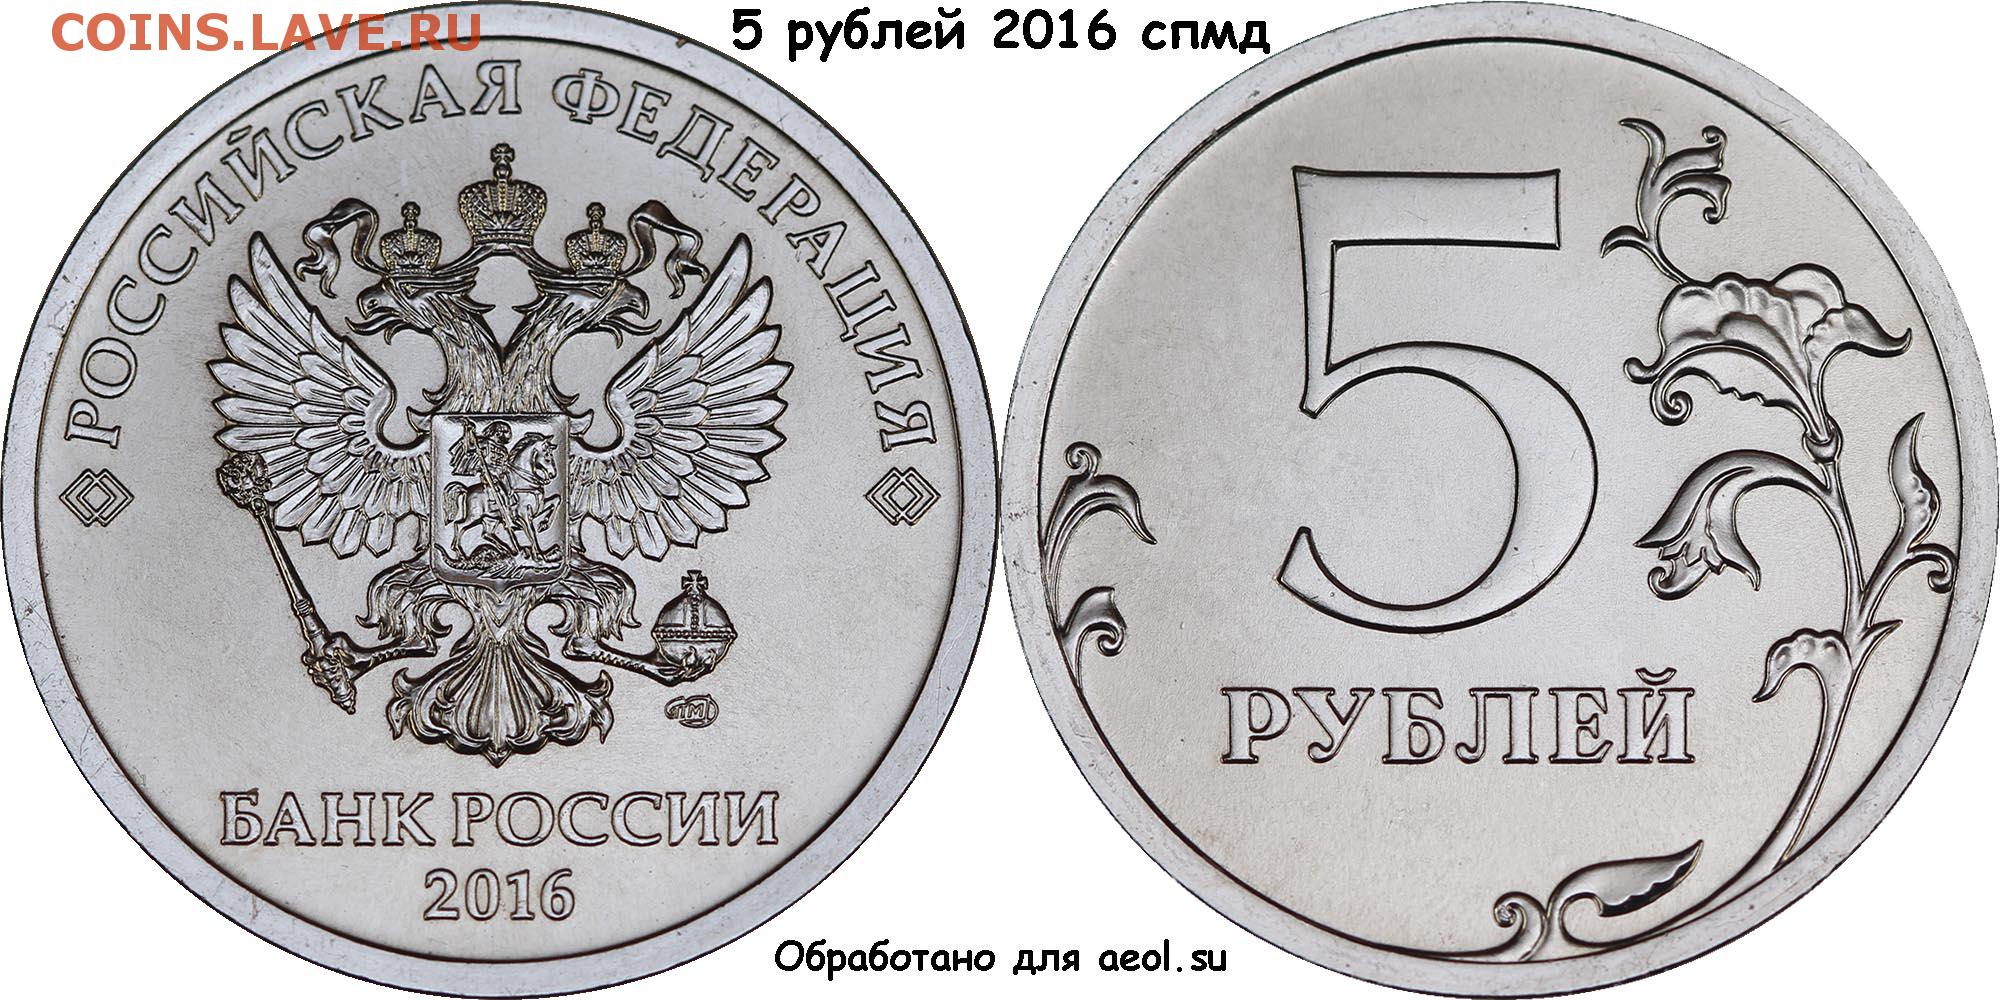 Живем на 1 рубль. Монета 2 рубля 2016 года СПМД. 5 Рублей 2016 года СПМД. Монета 1 рубль реверс и Аверс. Монета 1 рубль 2016 года СПМД.